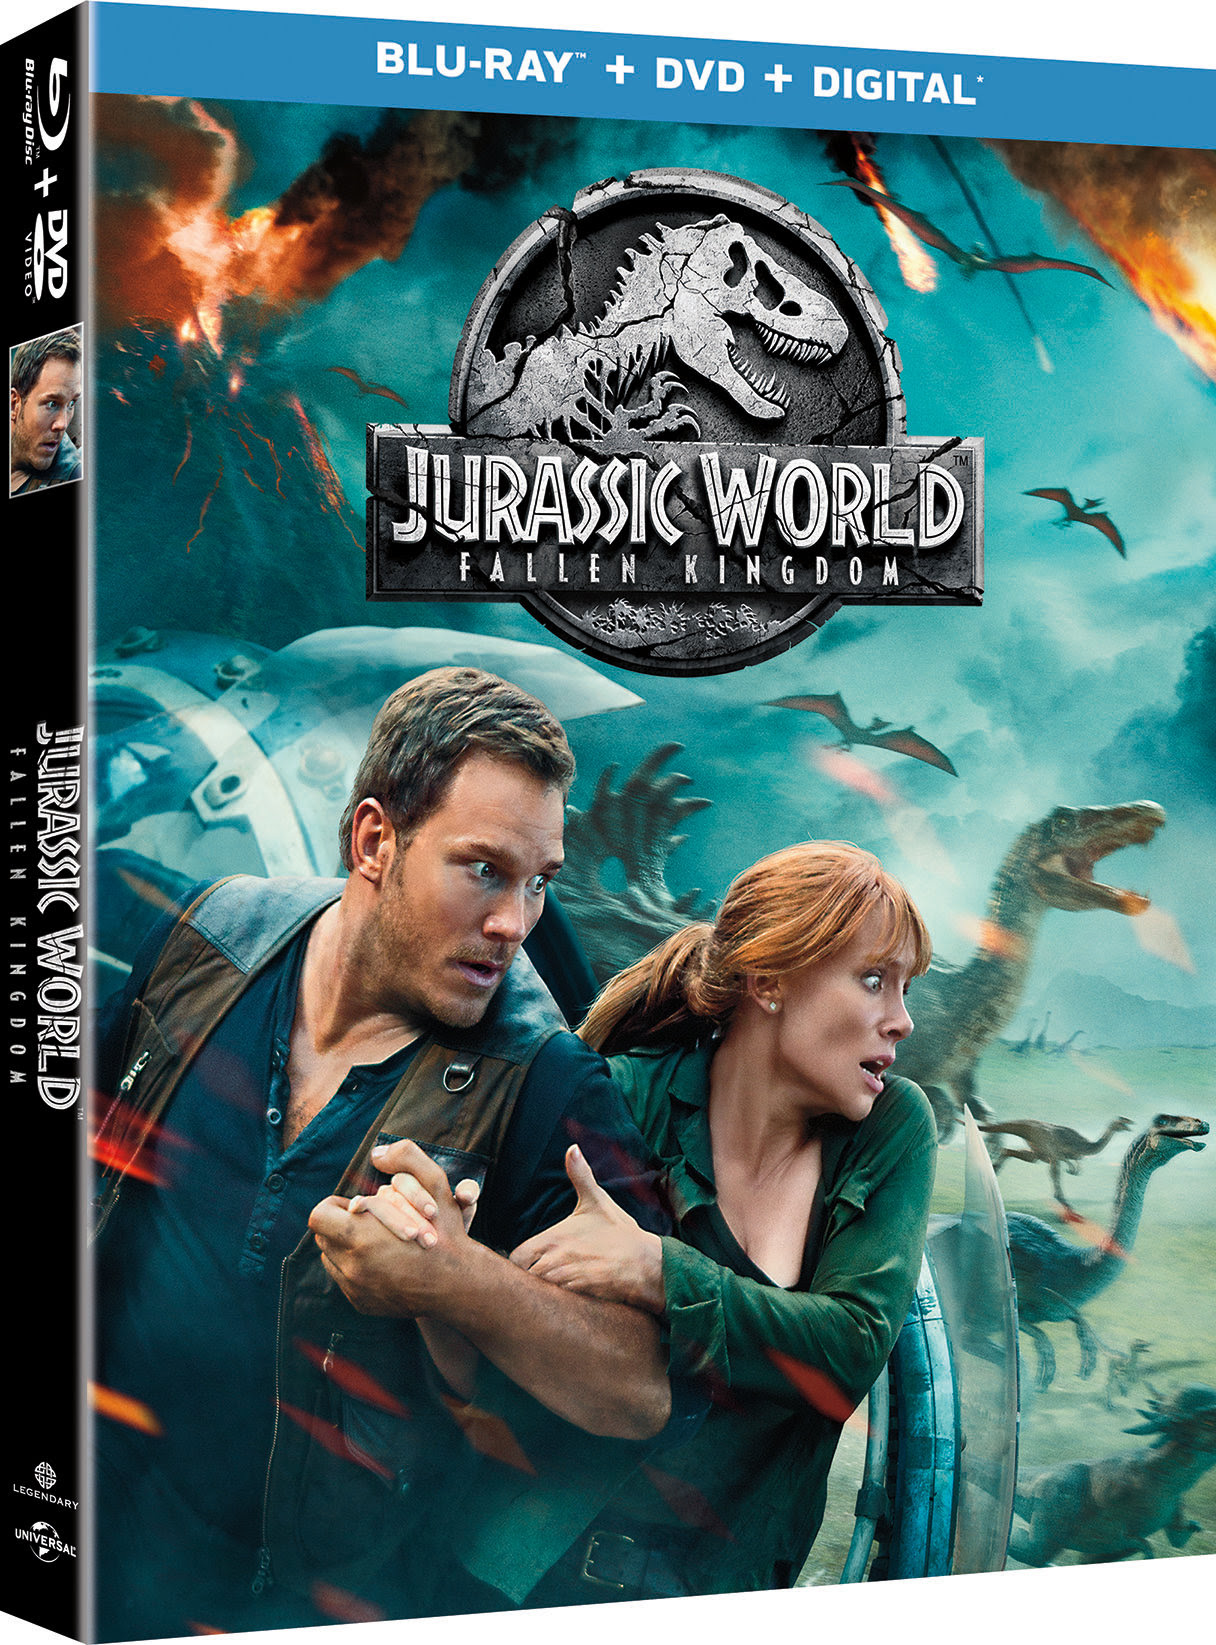 Jurassic World 2 Fallen Kingdom blu-ray dvd digital 4k release